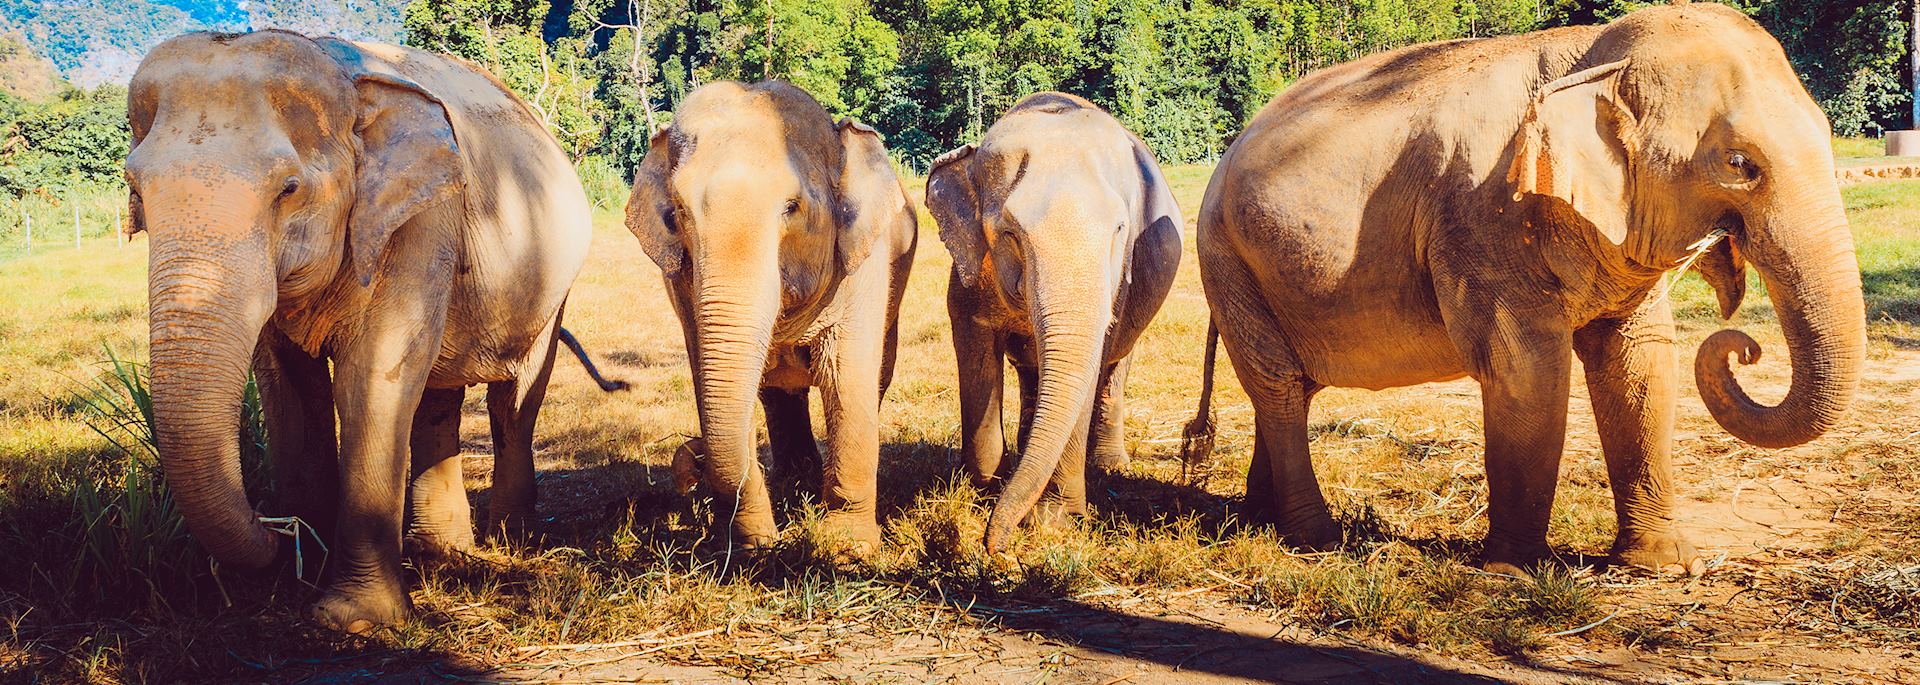 Elephants at Elephant Hills Tented Camp